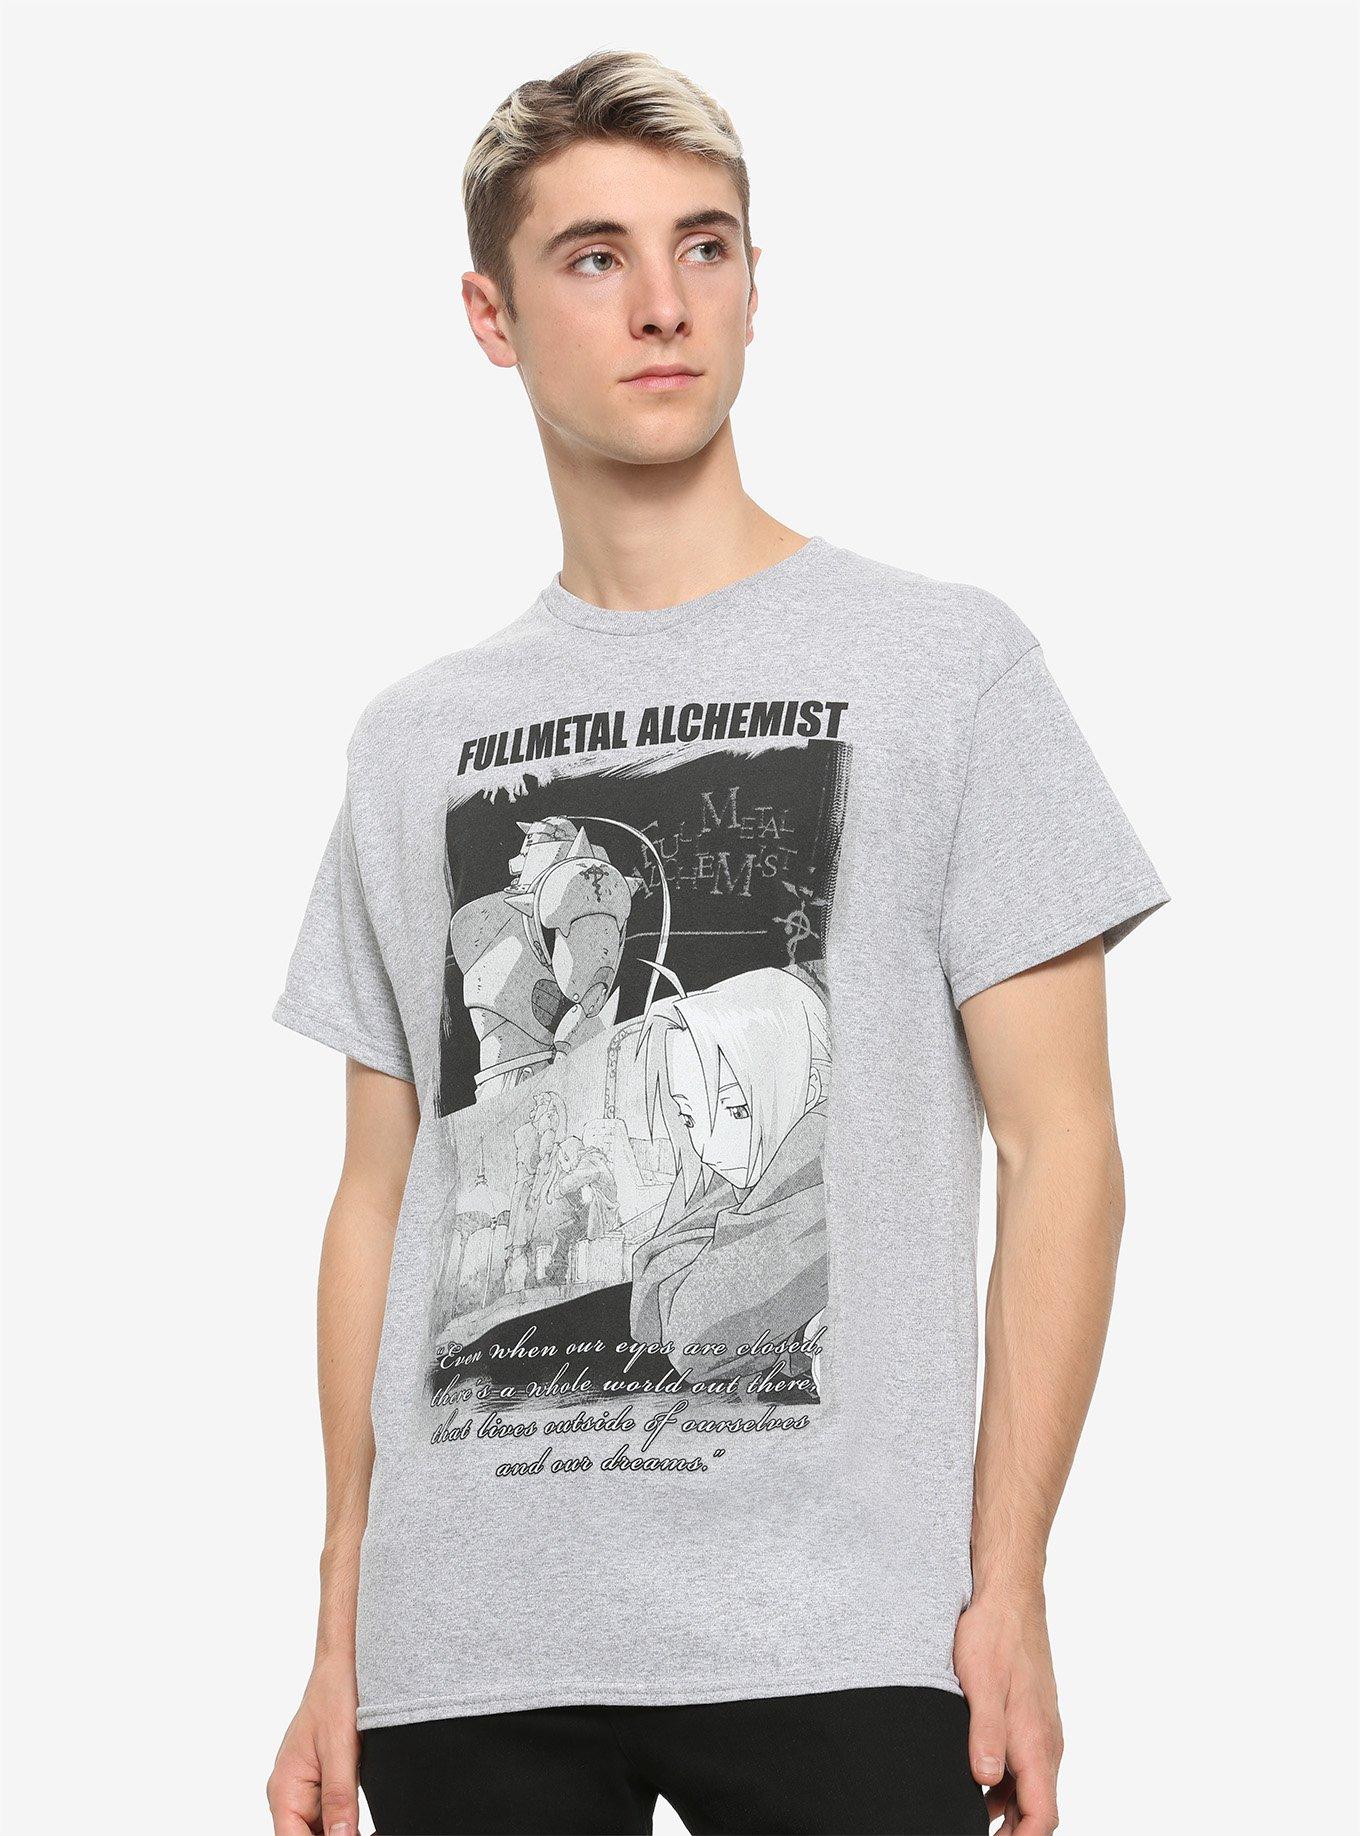 Fullmetal Alchemist Black & White Collage T-Shirt, GREY, alternate